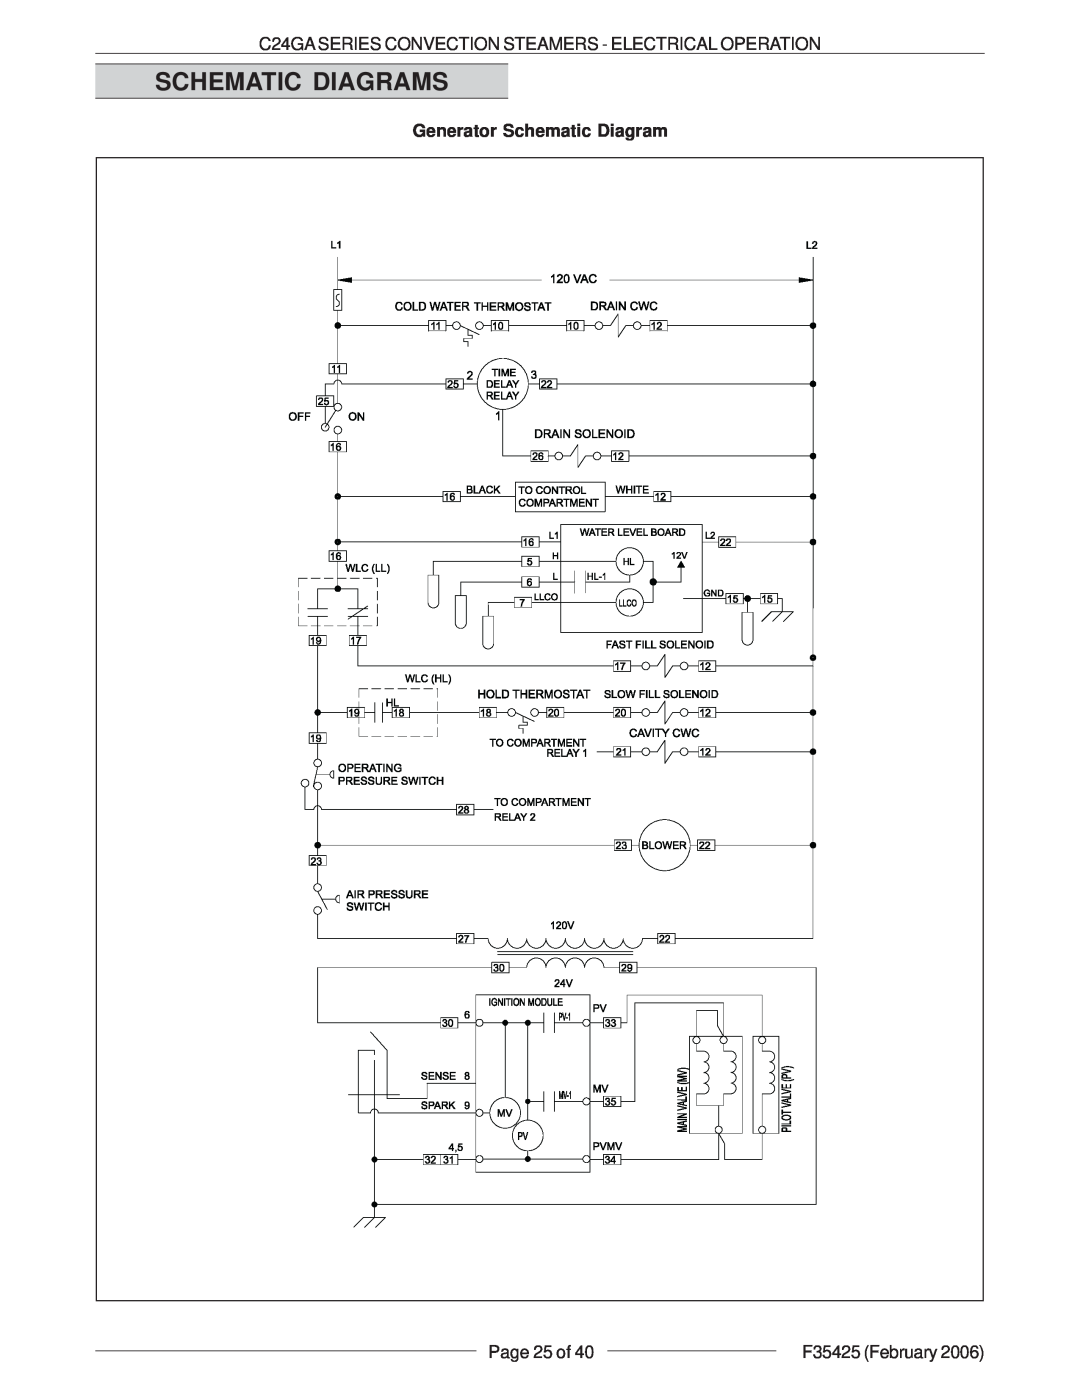 Vulcan-Hart C24GA6 ML-136021, C24GA10 ML-136022 service manual Schematic Diagrams, Generator Schematic Diagram 